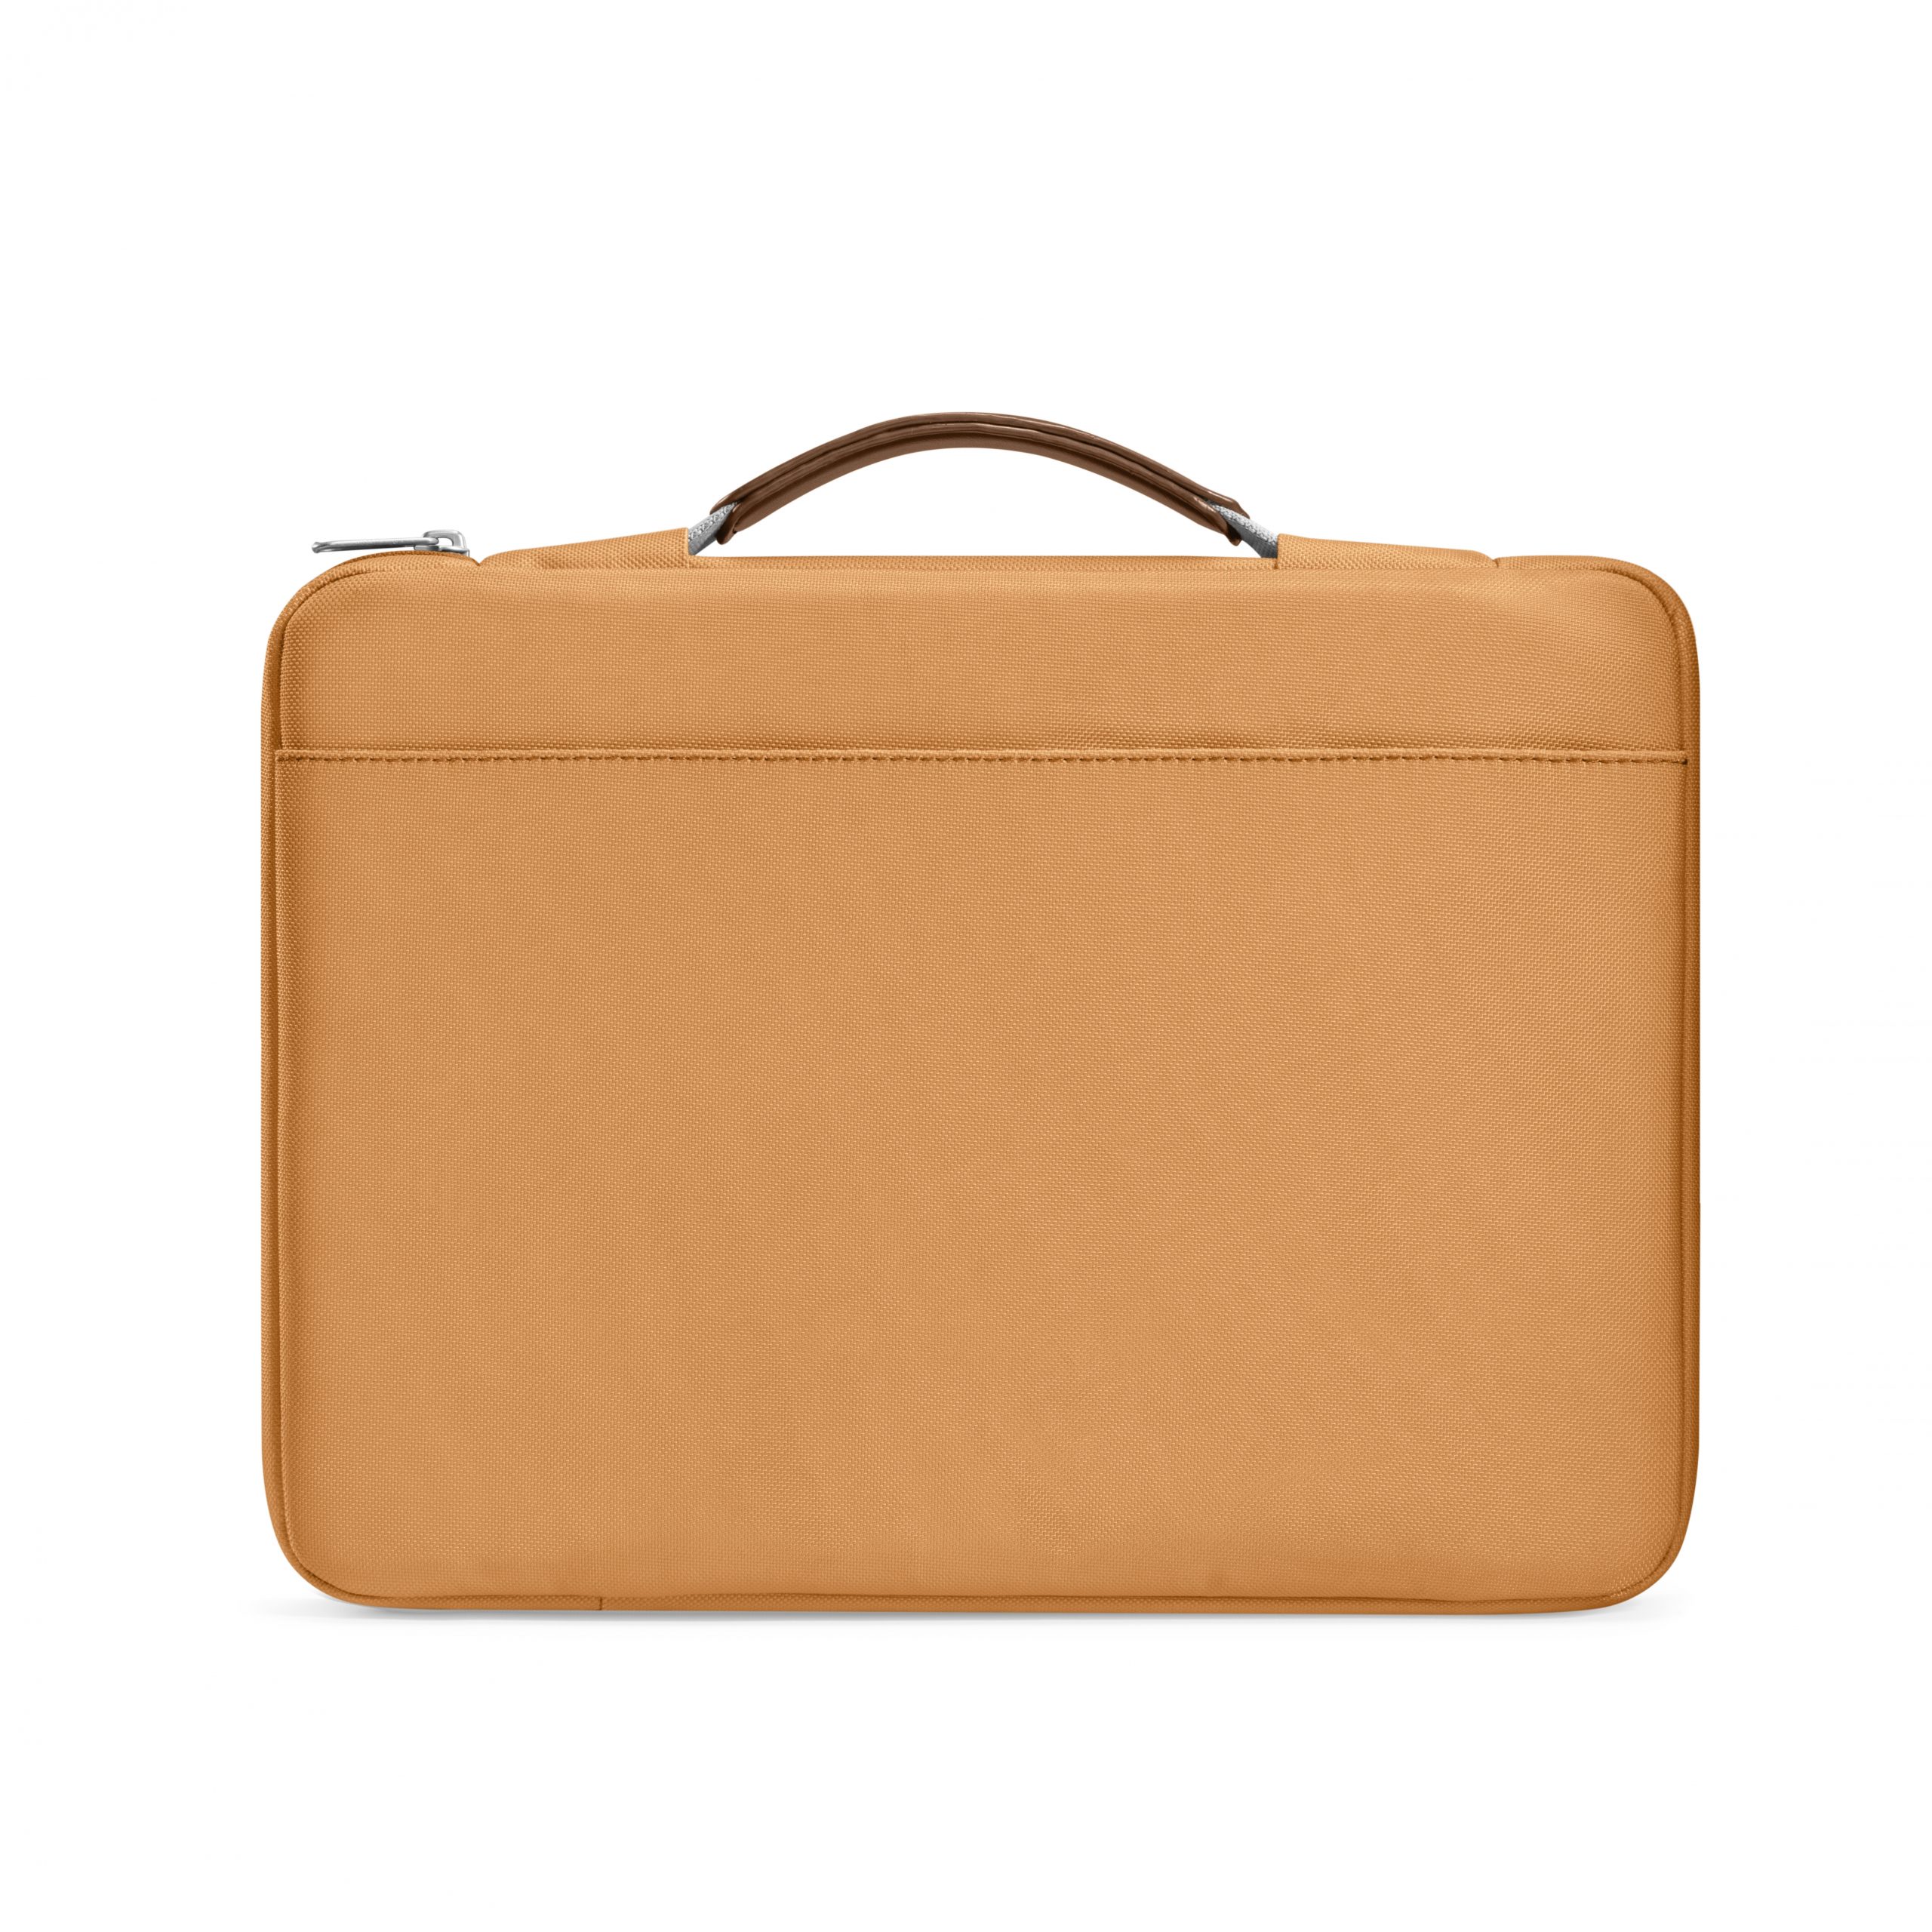 Túi Xách Chống Sốc Cho Macbook Pro Tomtoc Briefcase  - Bronze (A14E2Y1)